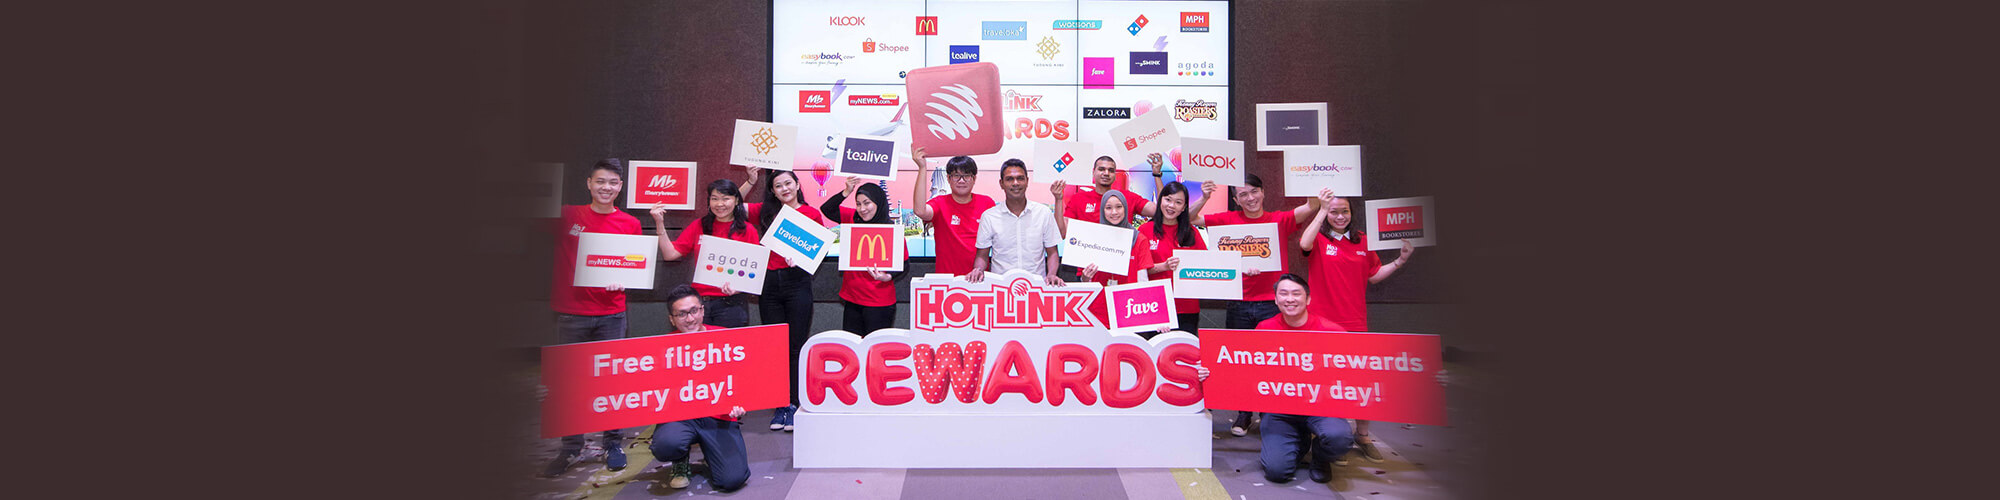 Hotlink rewards